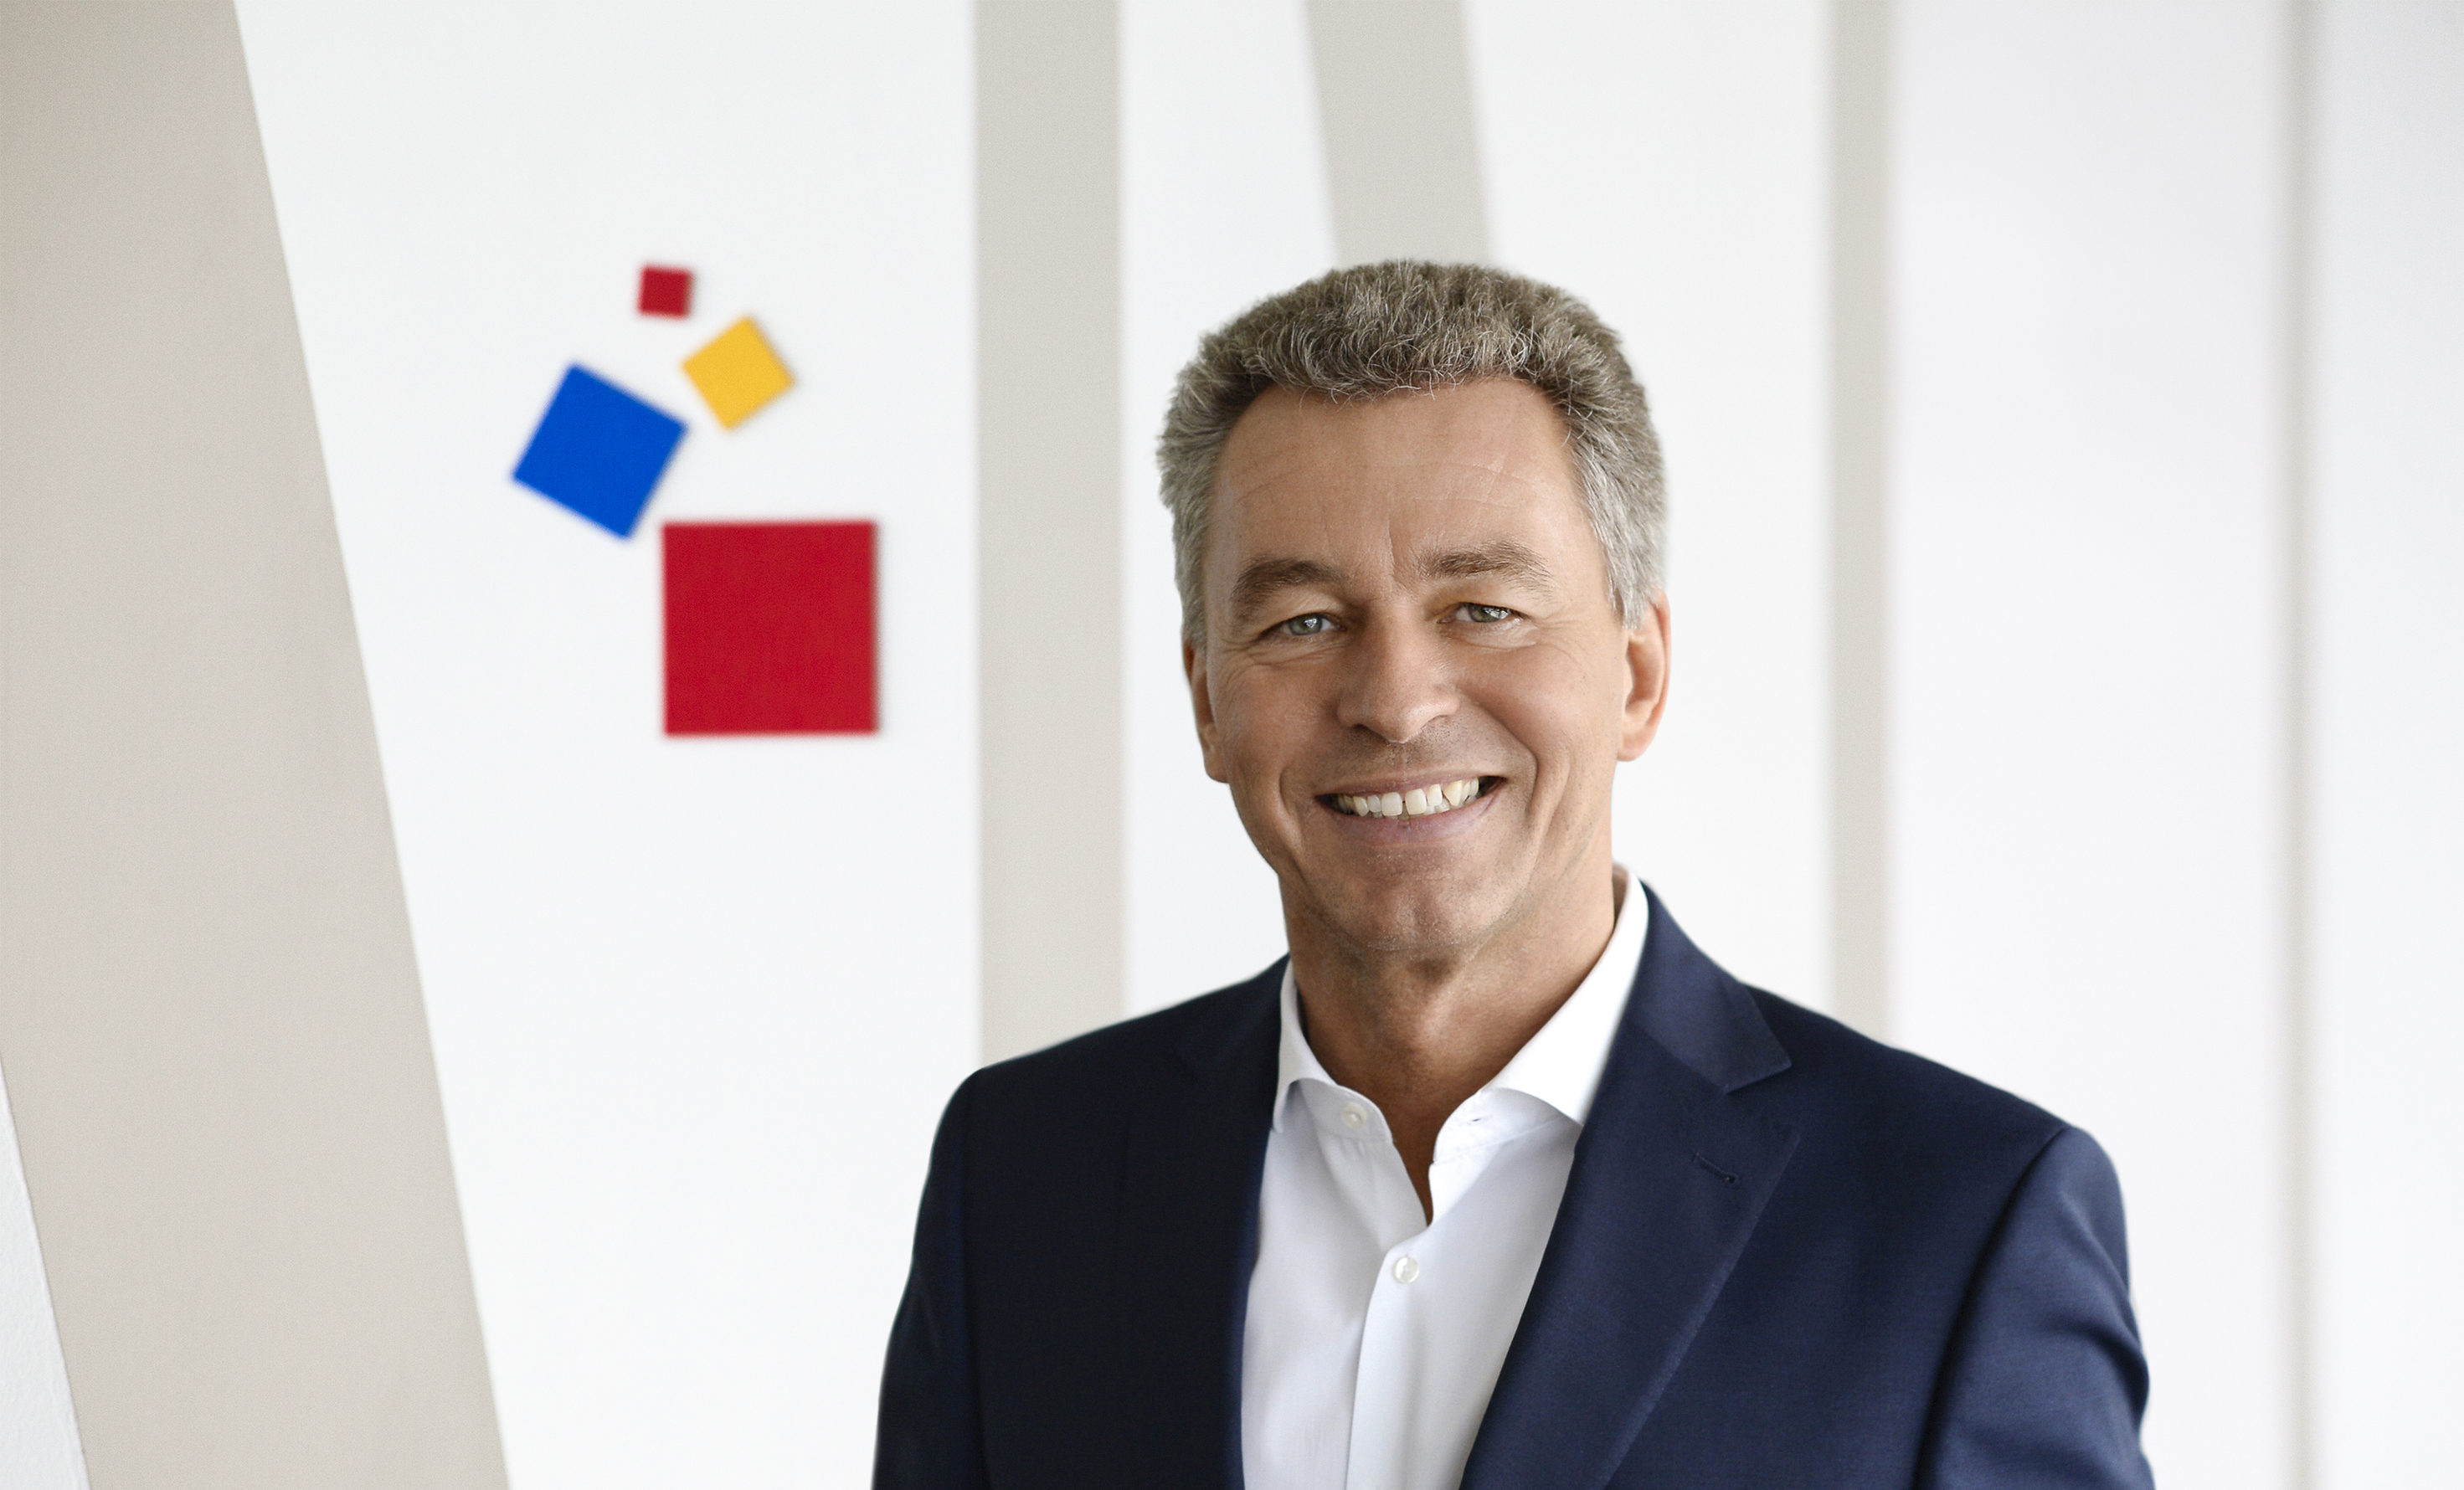 Detlef Braun, Member of the Executive Board of Messe Frankfurt GmbH